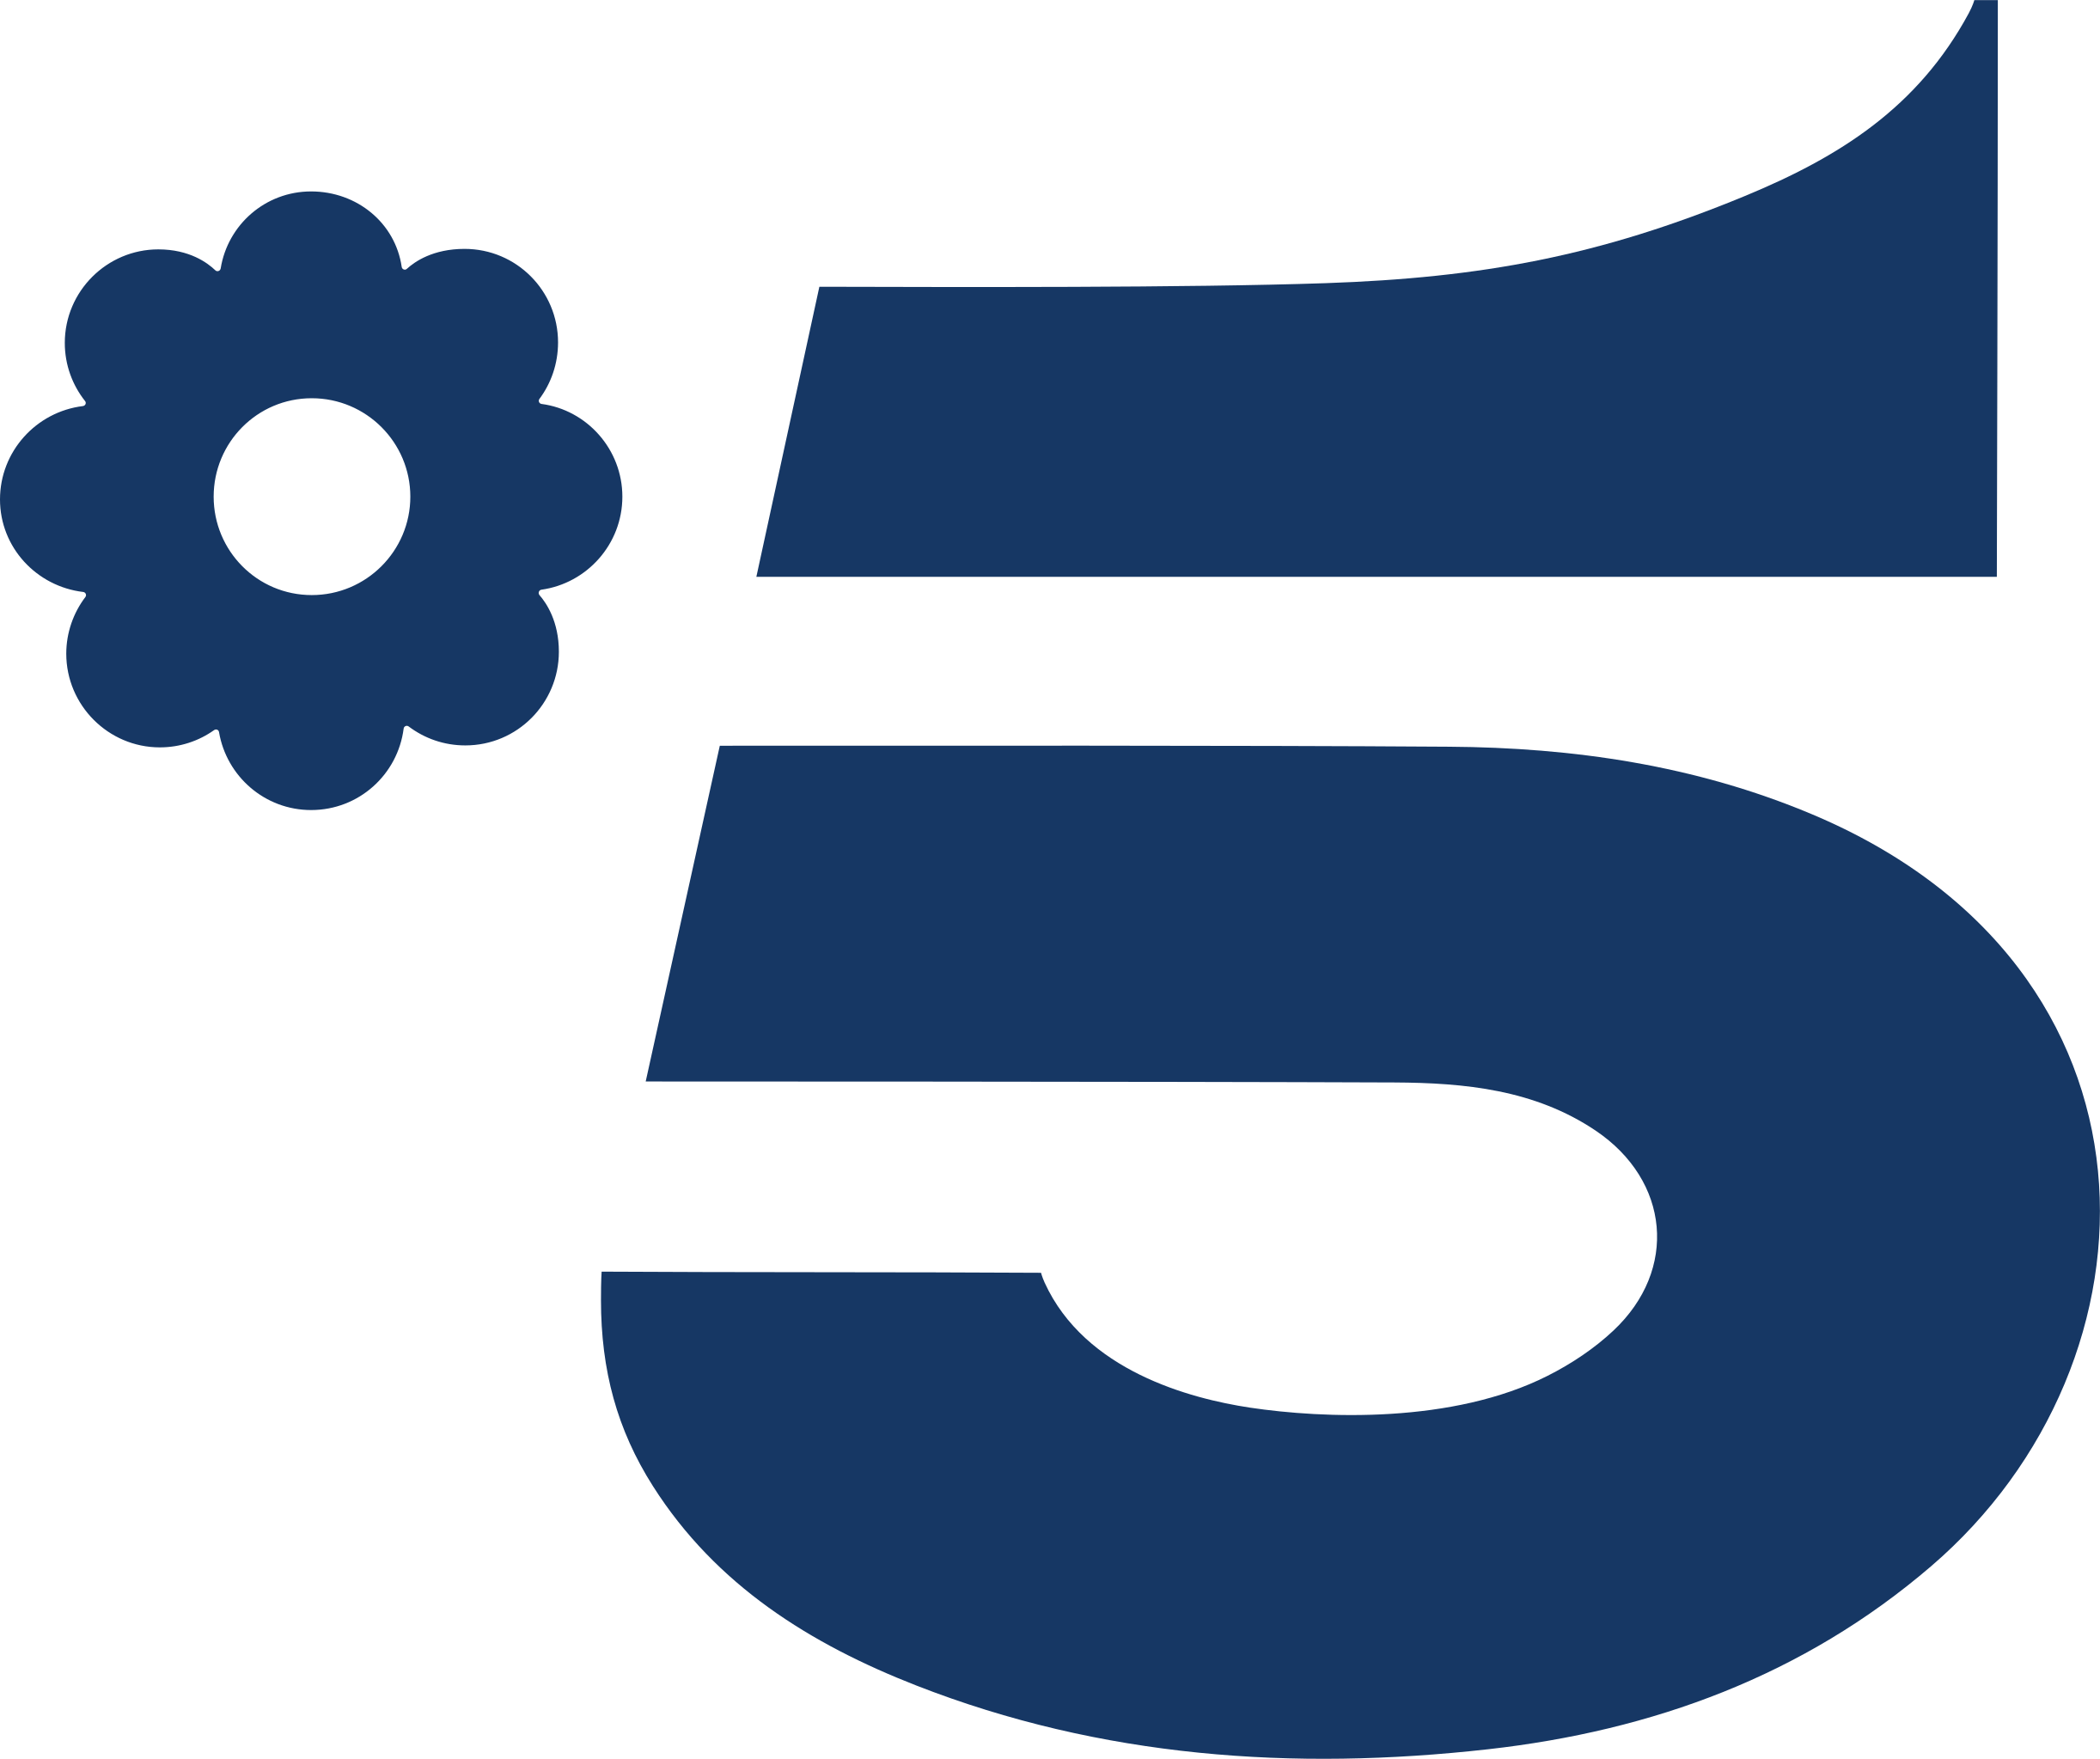 Canale 5 2018 logo.svg